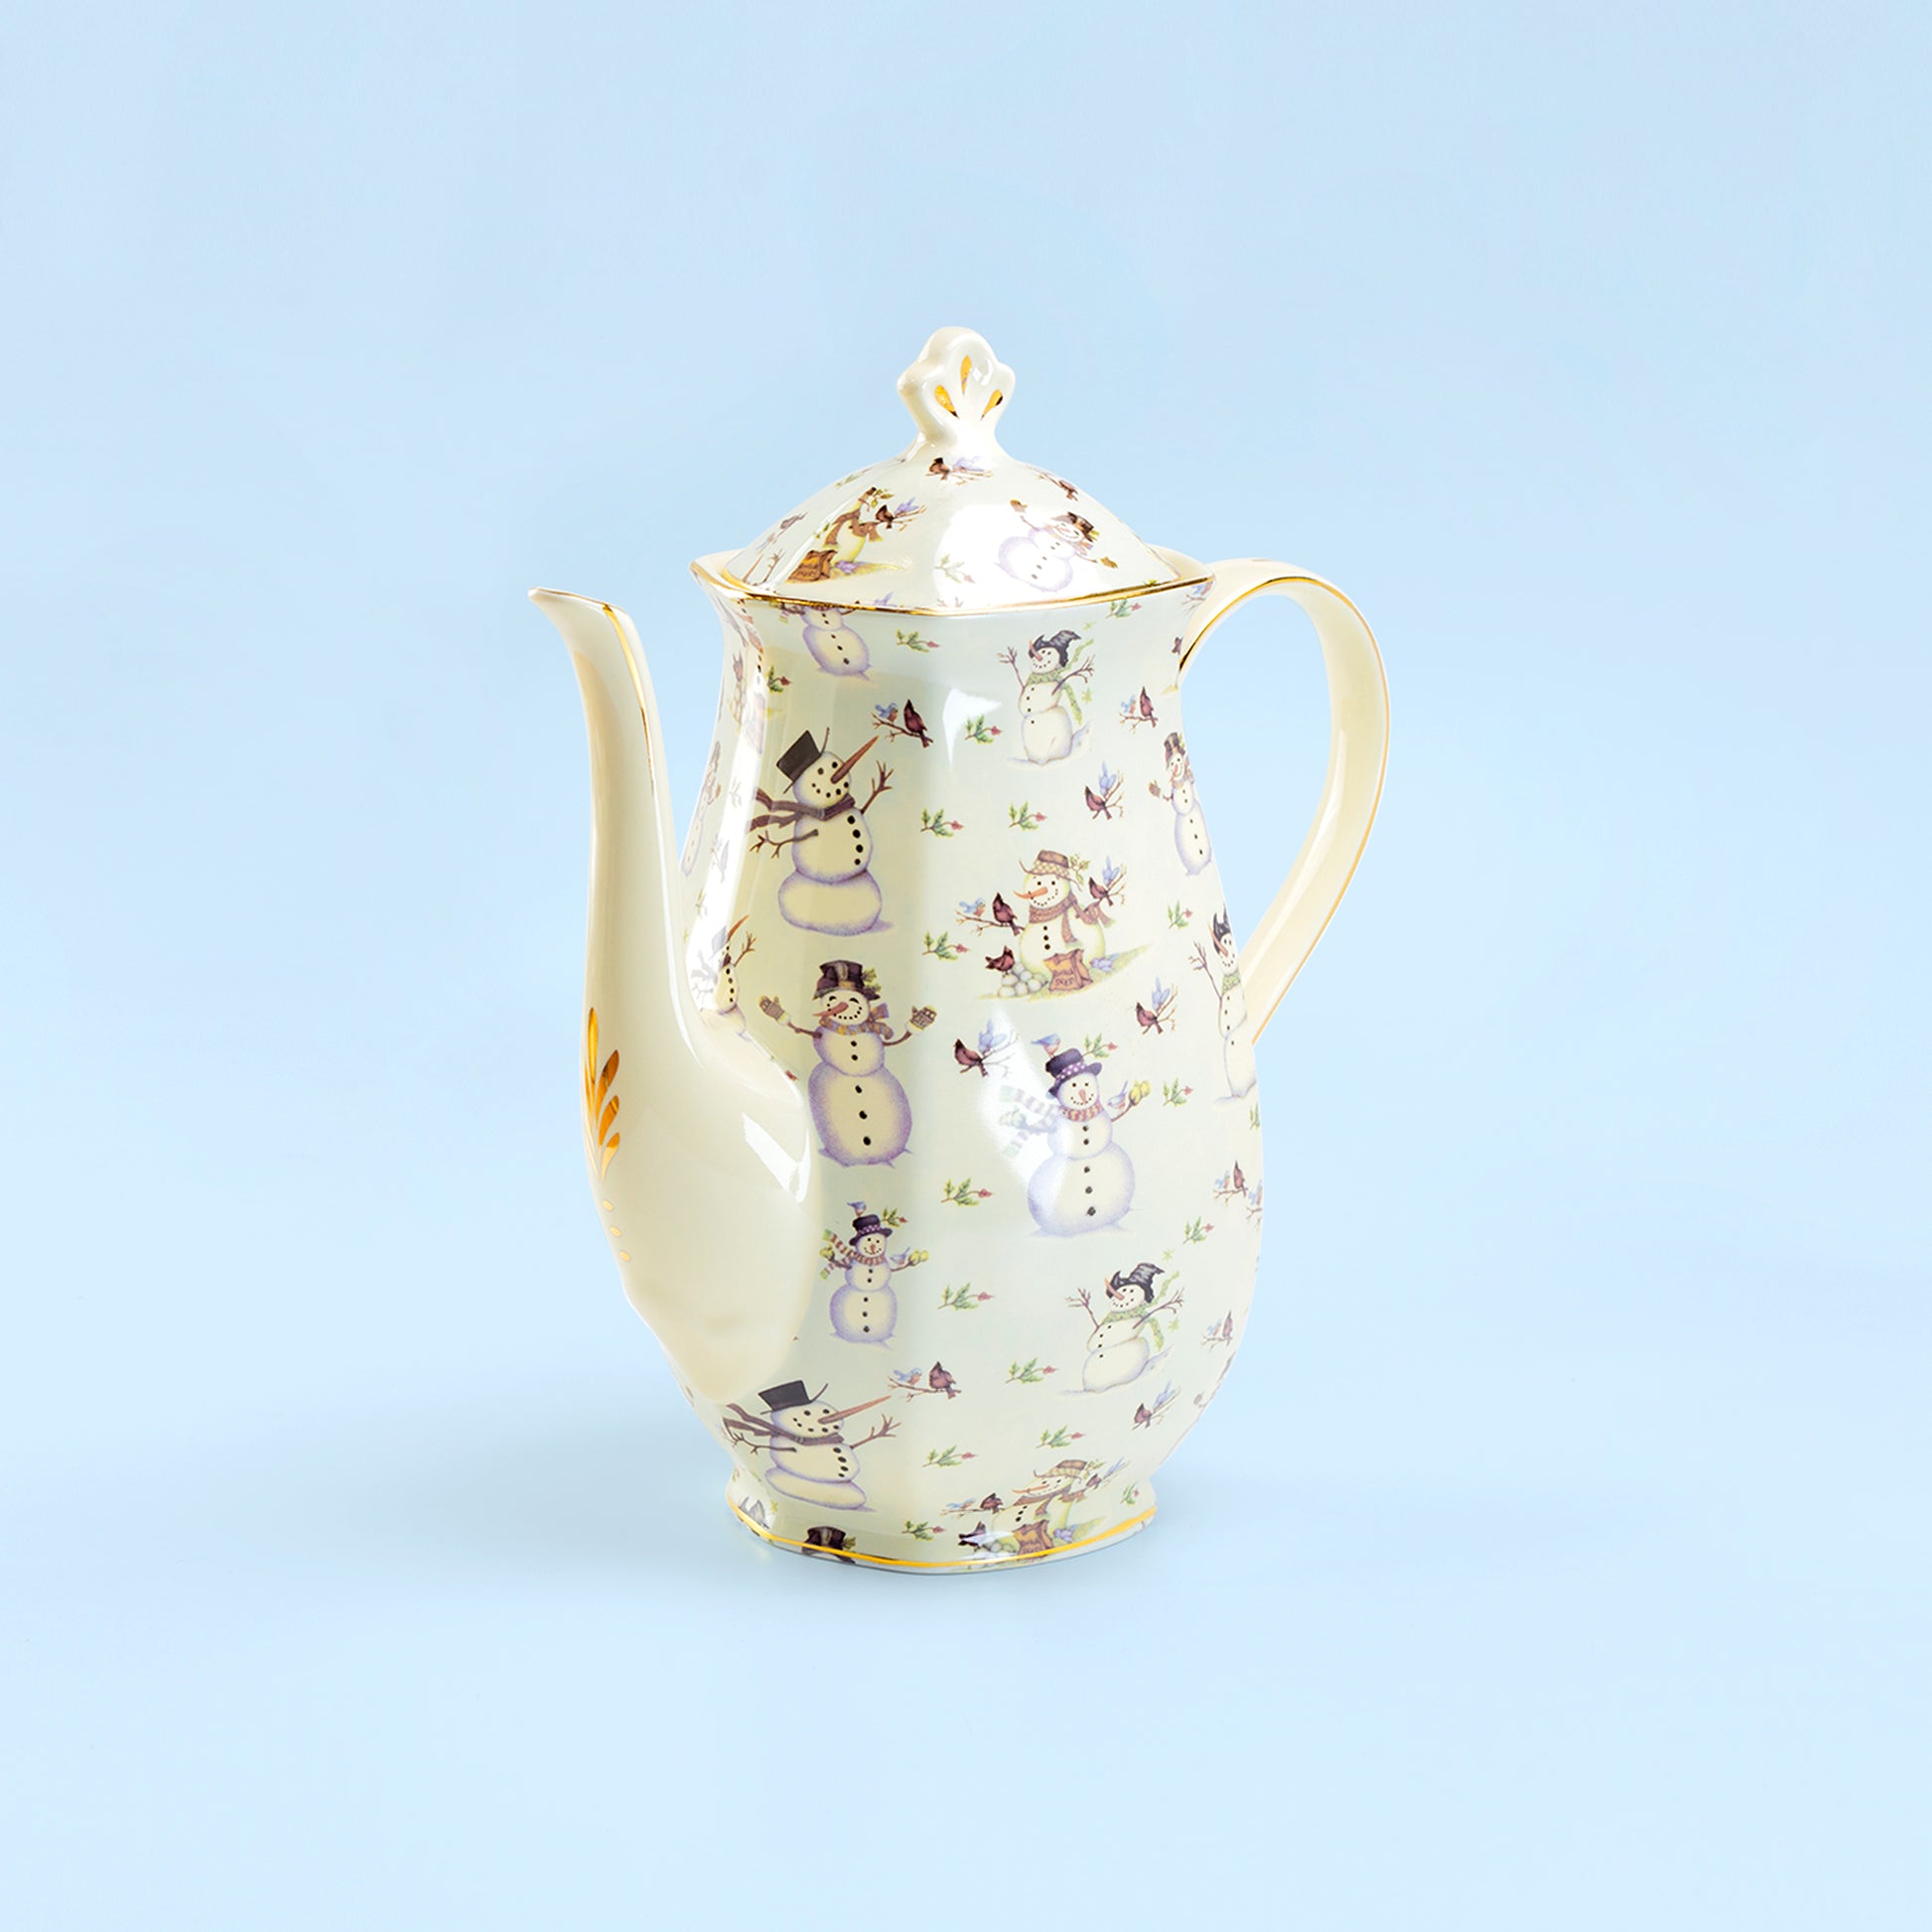 Grace Teaware Holiday Snowman Fine Porcelain Chocolate Pot 40oz Capacity